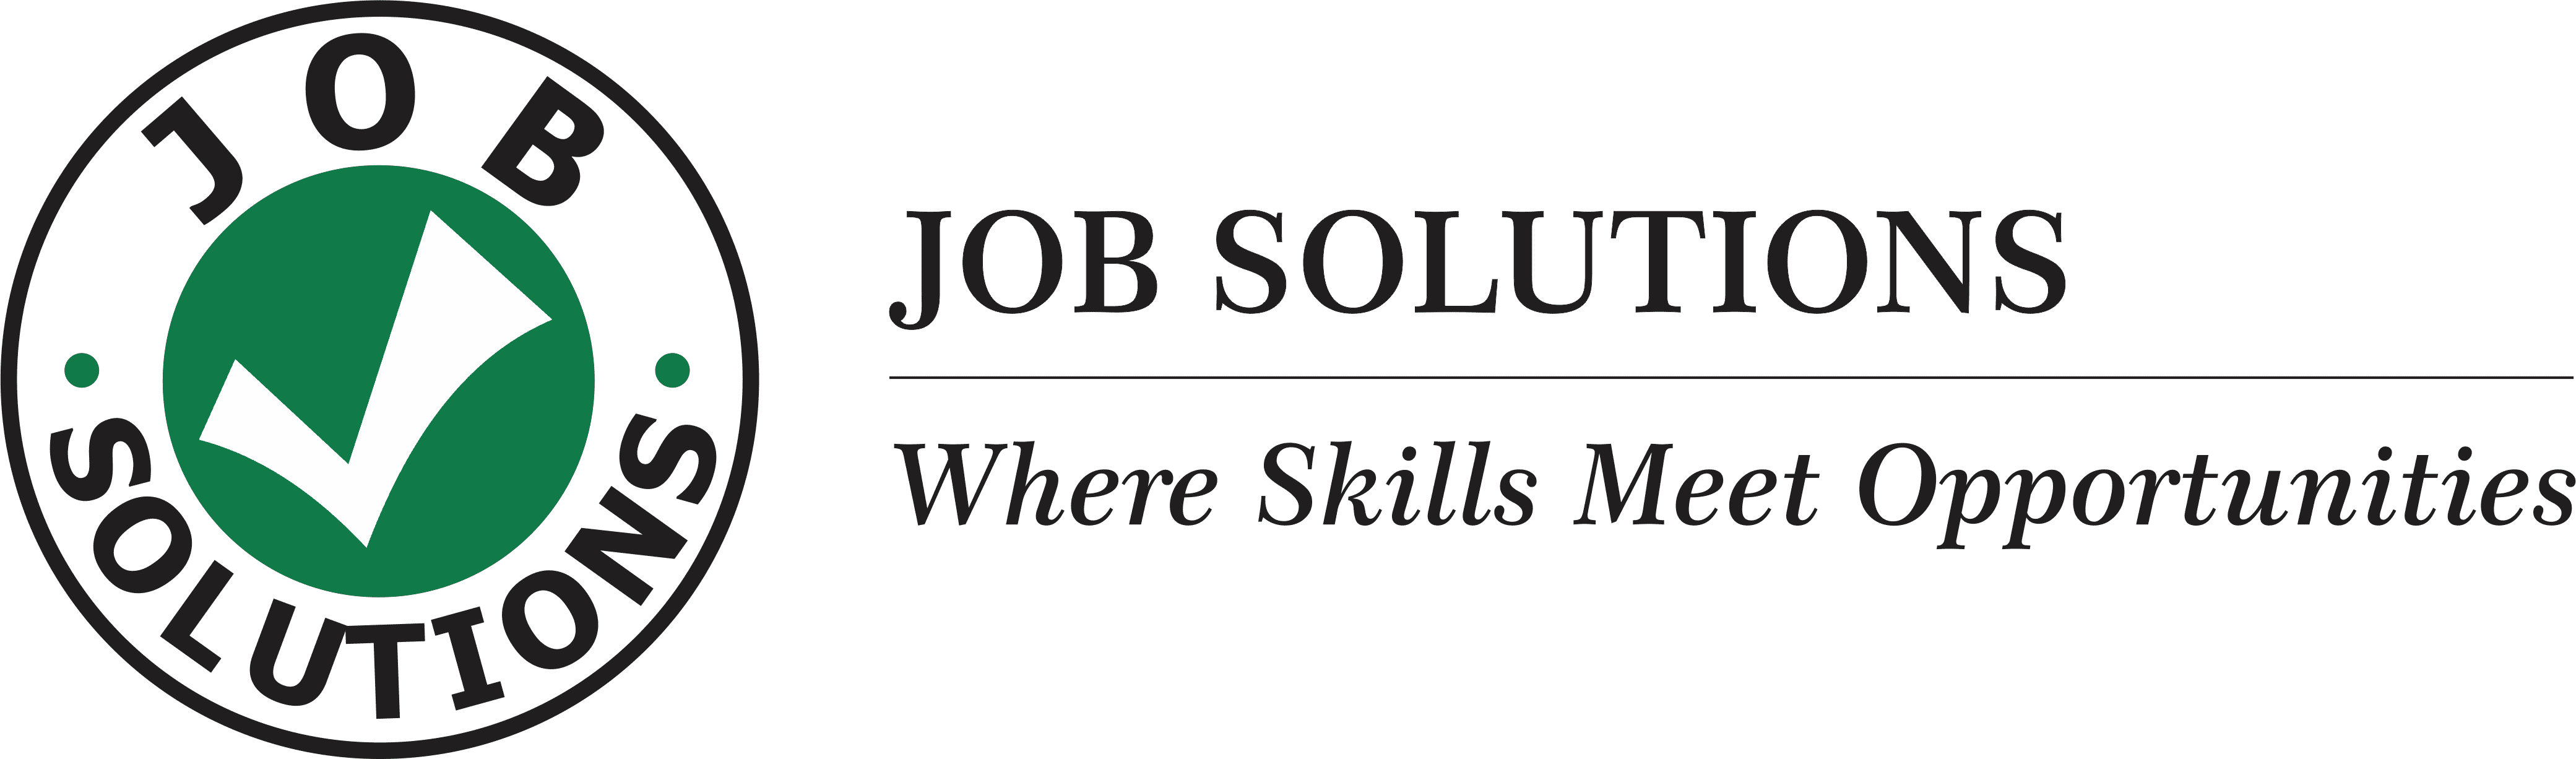 Job Solutions logo (1)